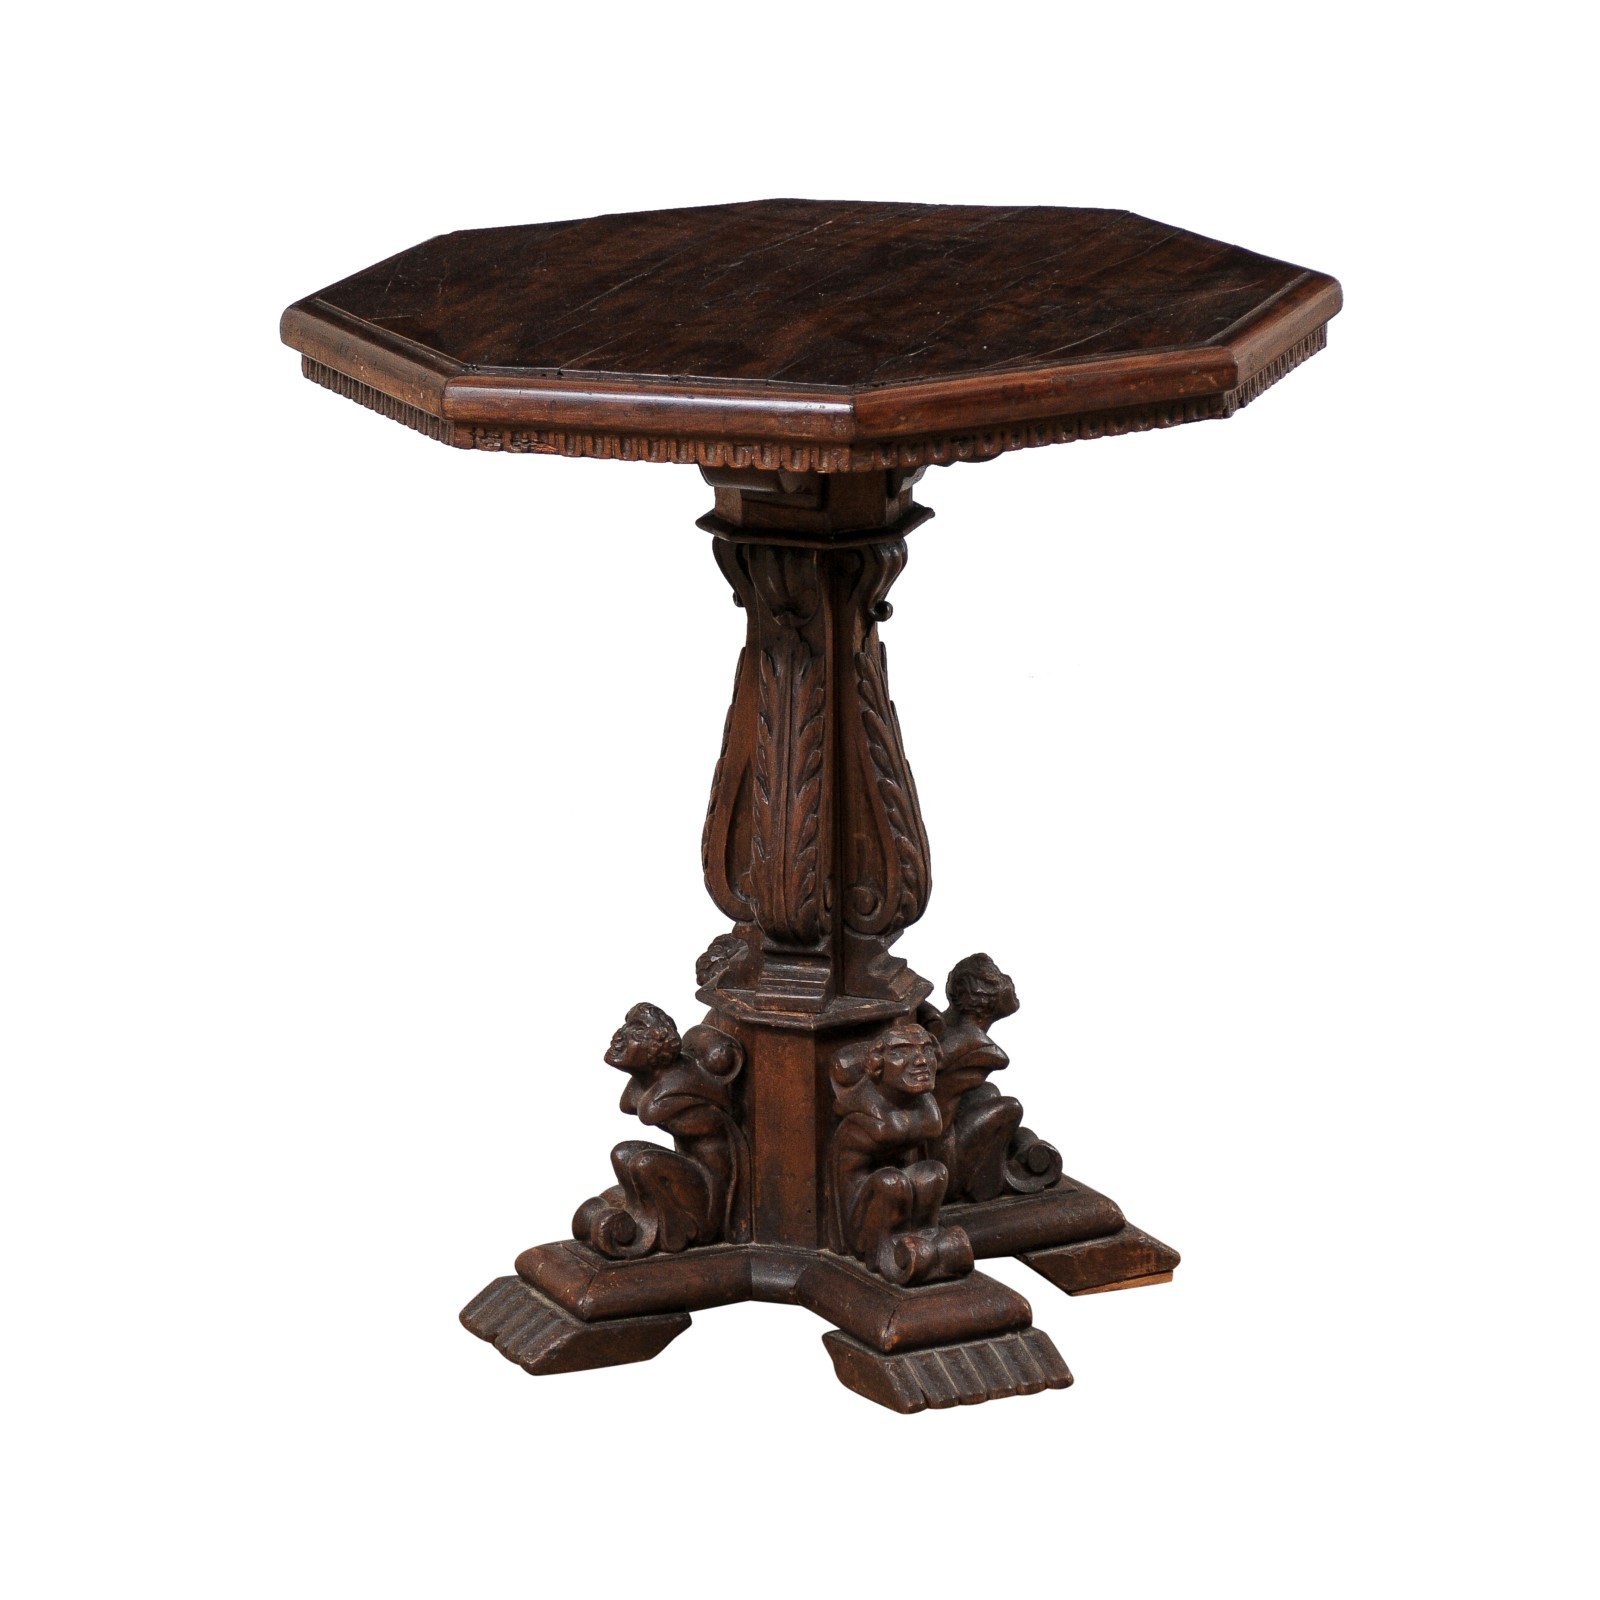 Italian Ornate Octagonal Side Table, 19th C